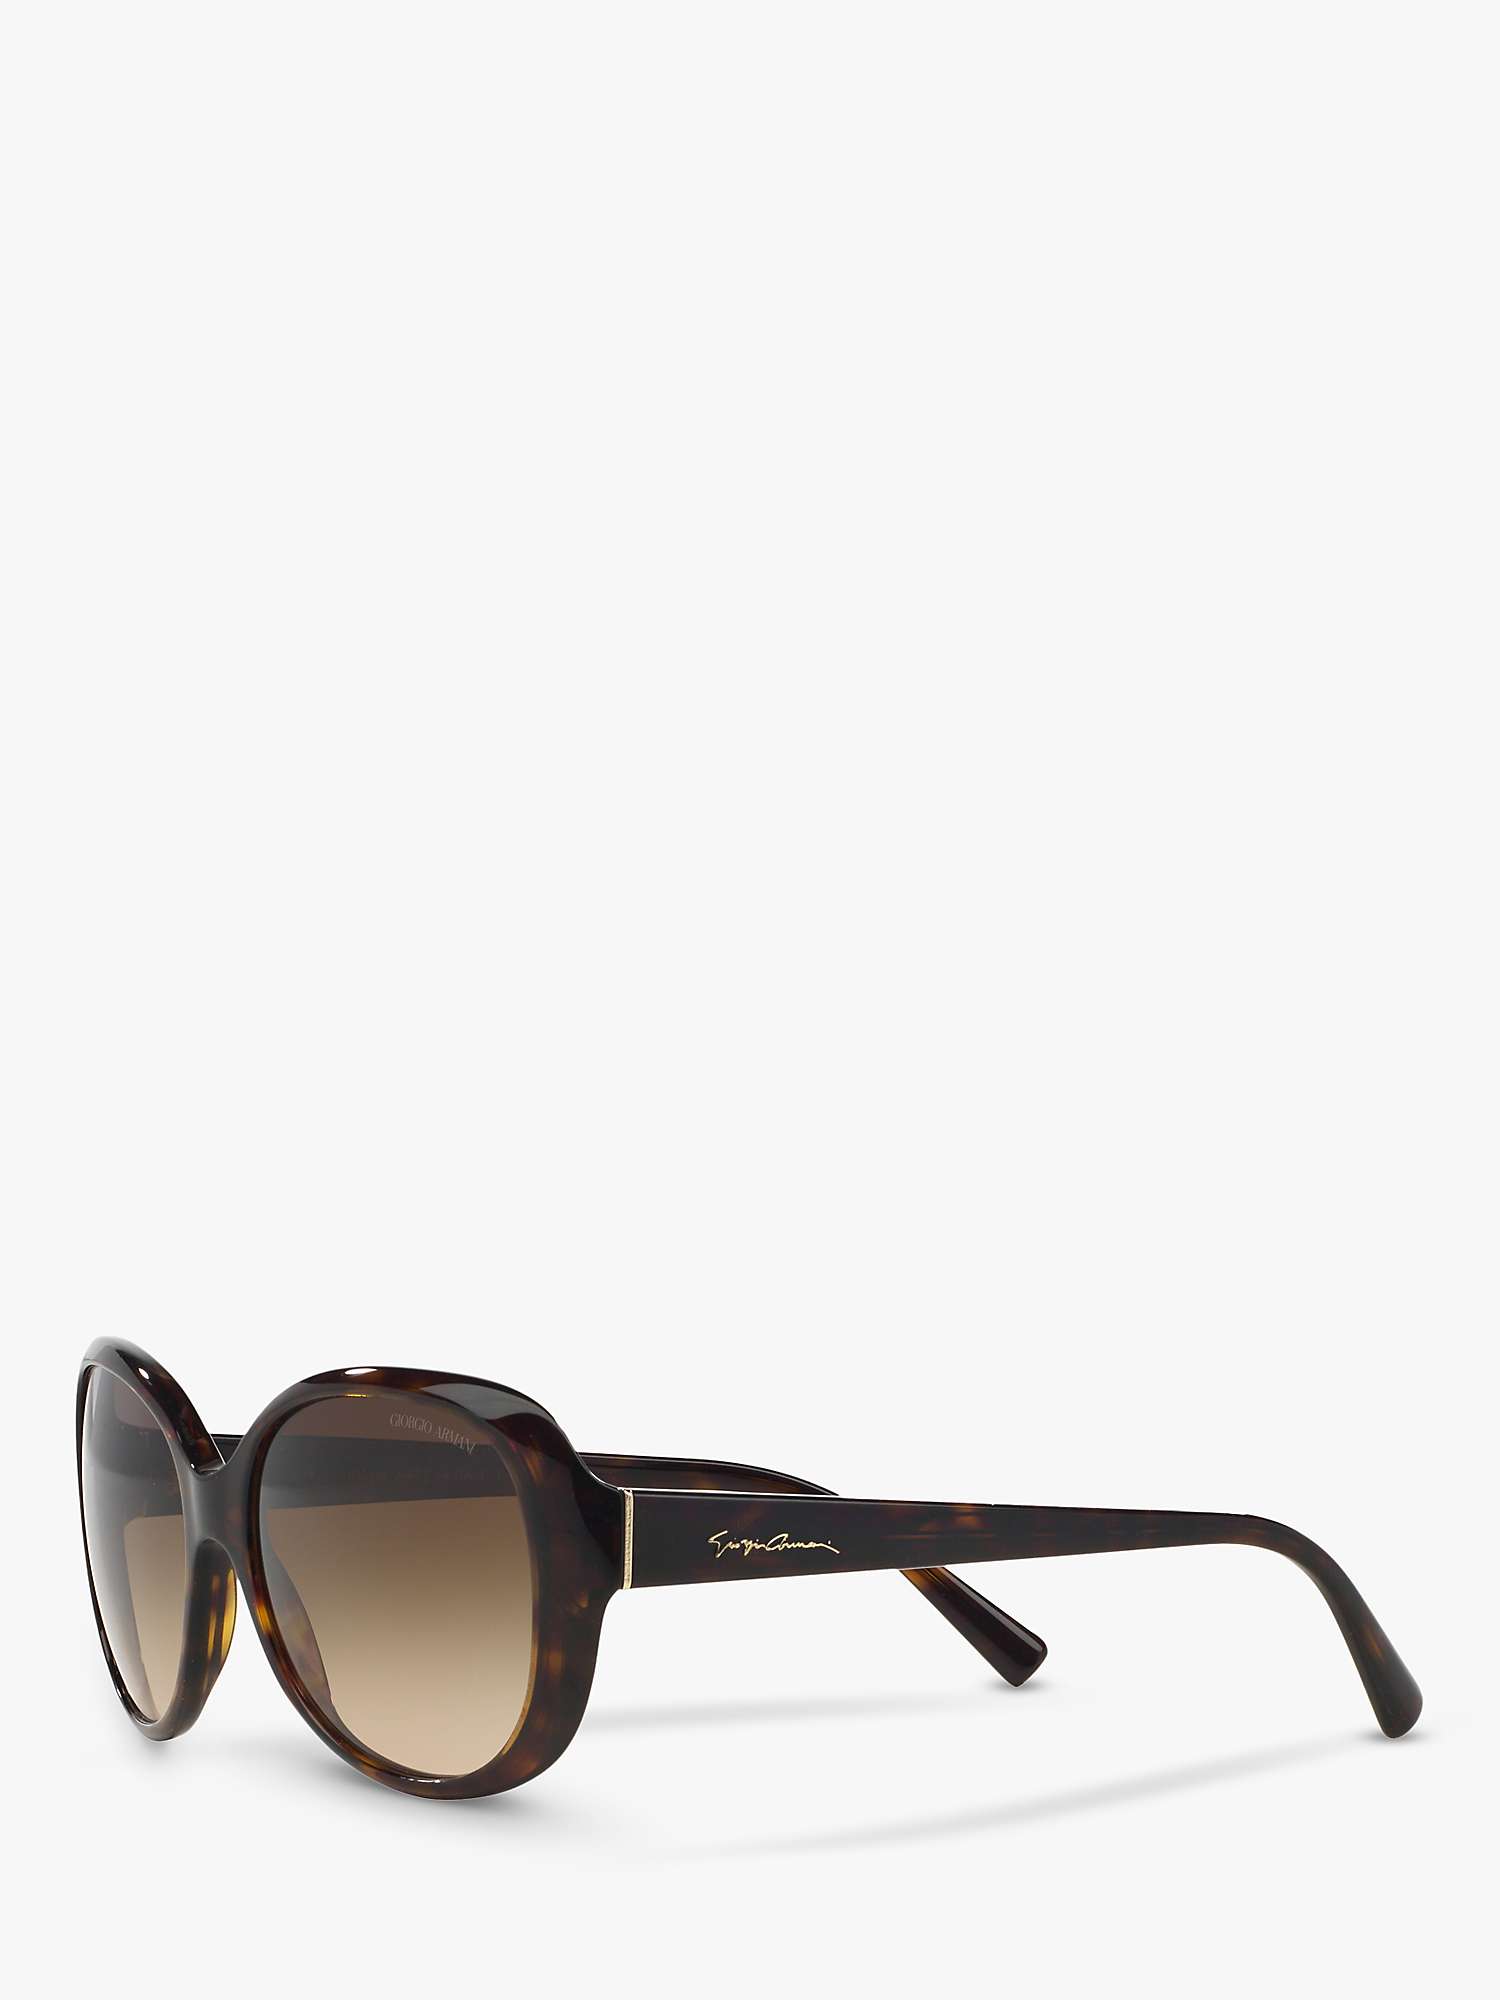 Buy Giorgio Armani AR8047 Women's Round Sunglasses, Havana/Brown Gradient Online at johnlewis.com